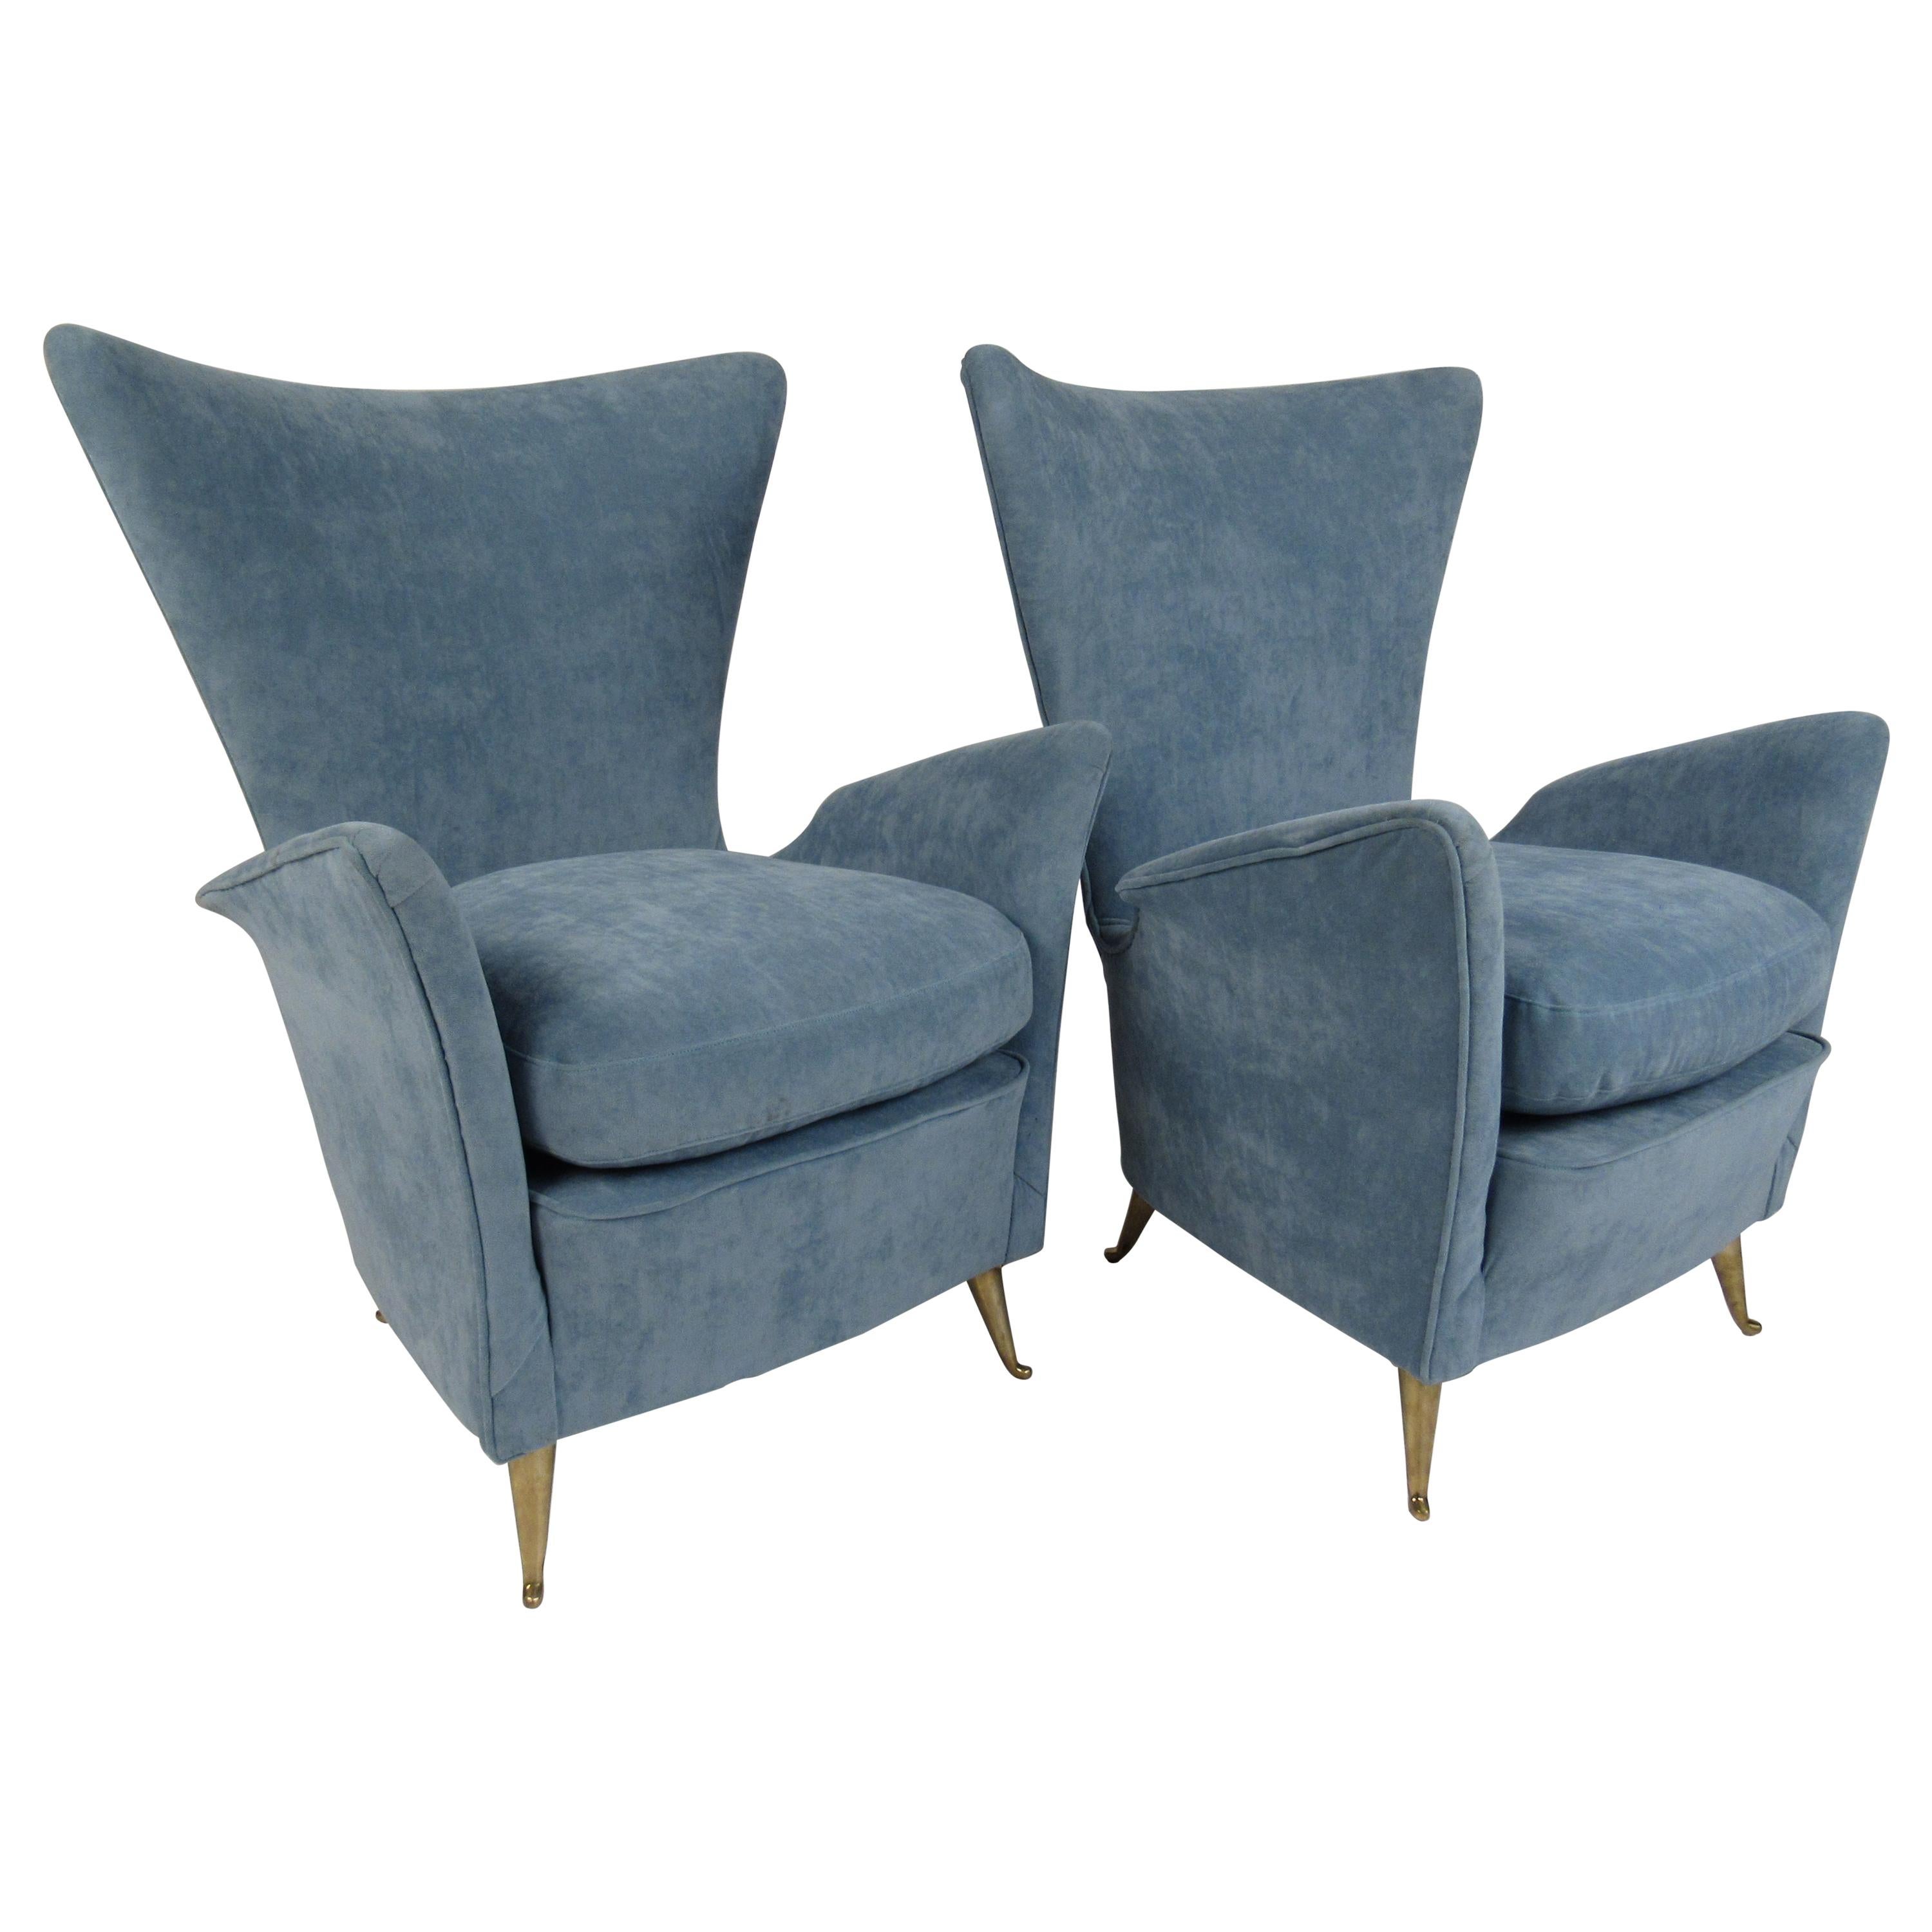 Pair of Italian Midcentury I.S.A Bergamo Style Lounge Chairs